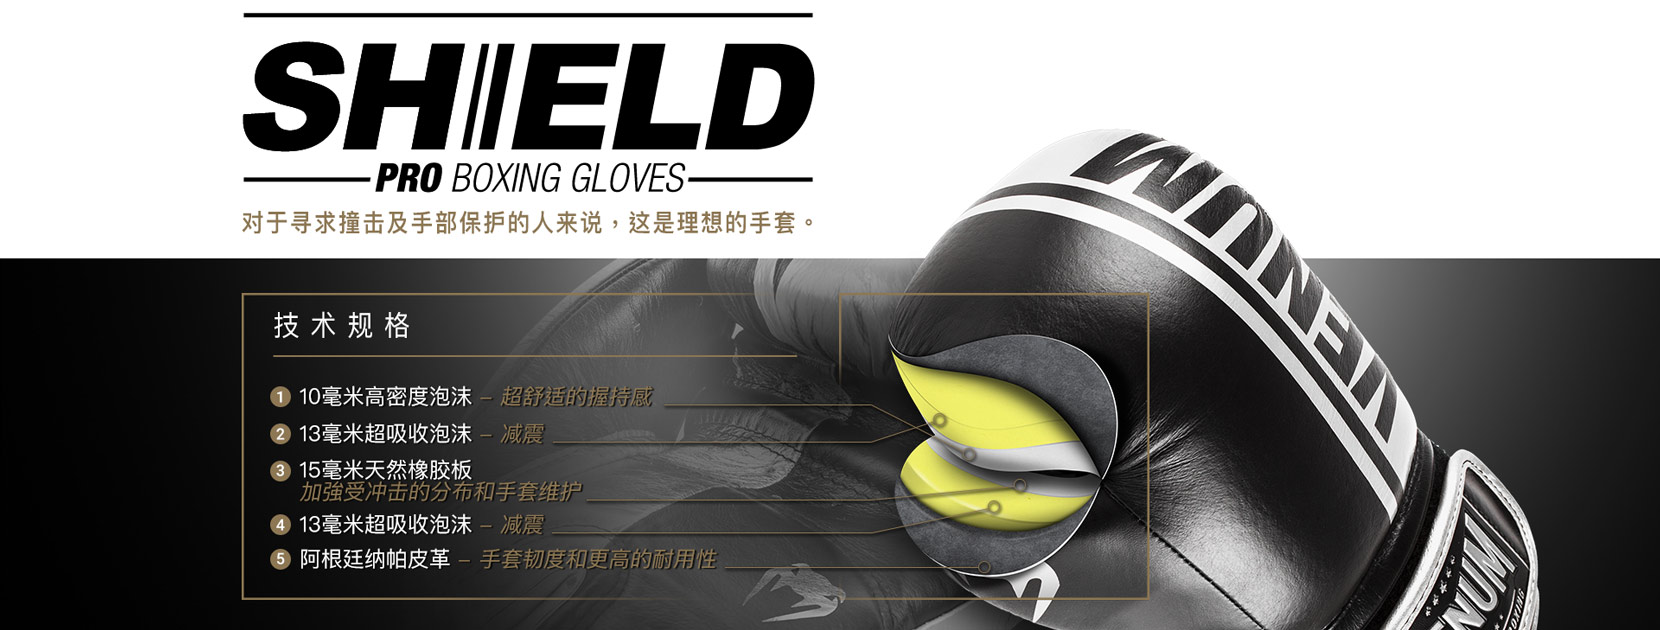 Shield Pro Boxing Gloves